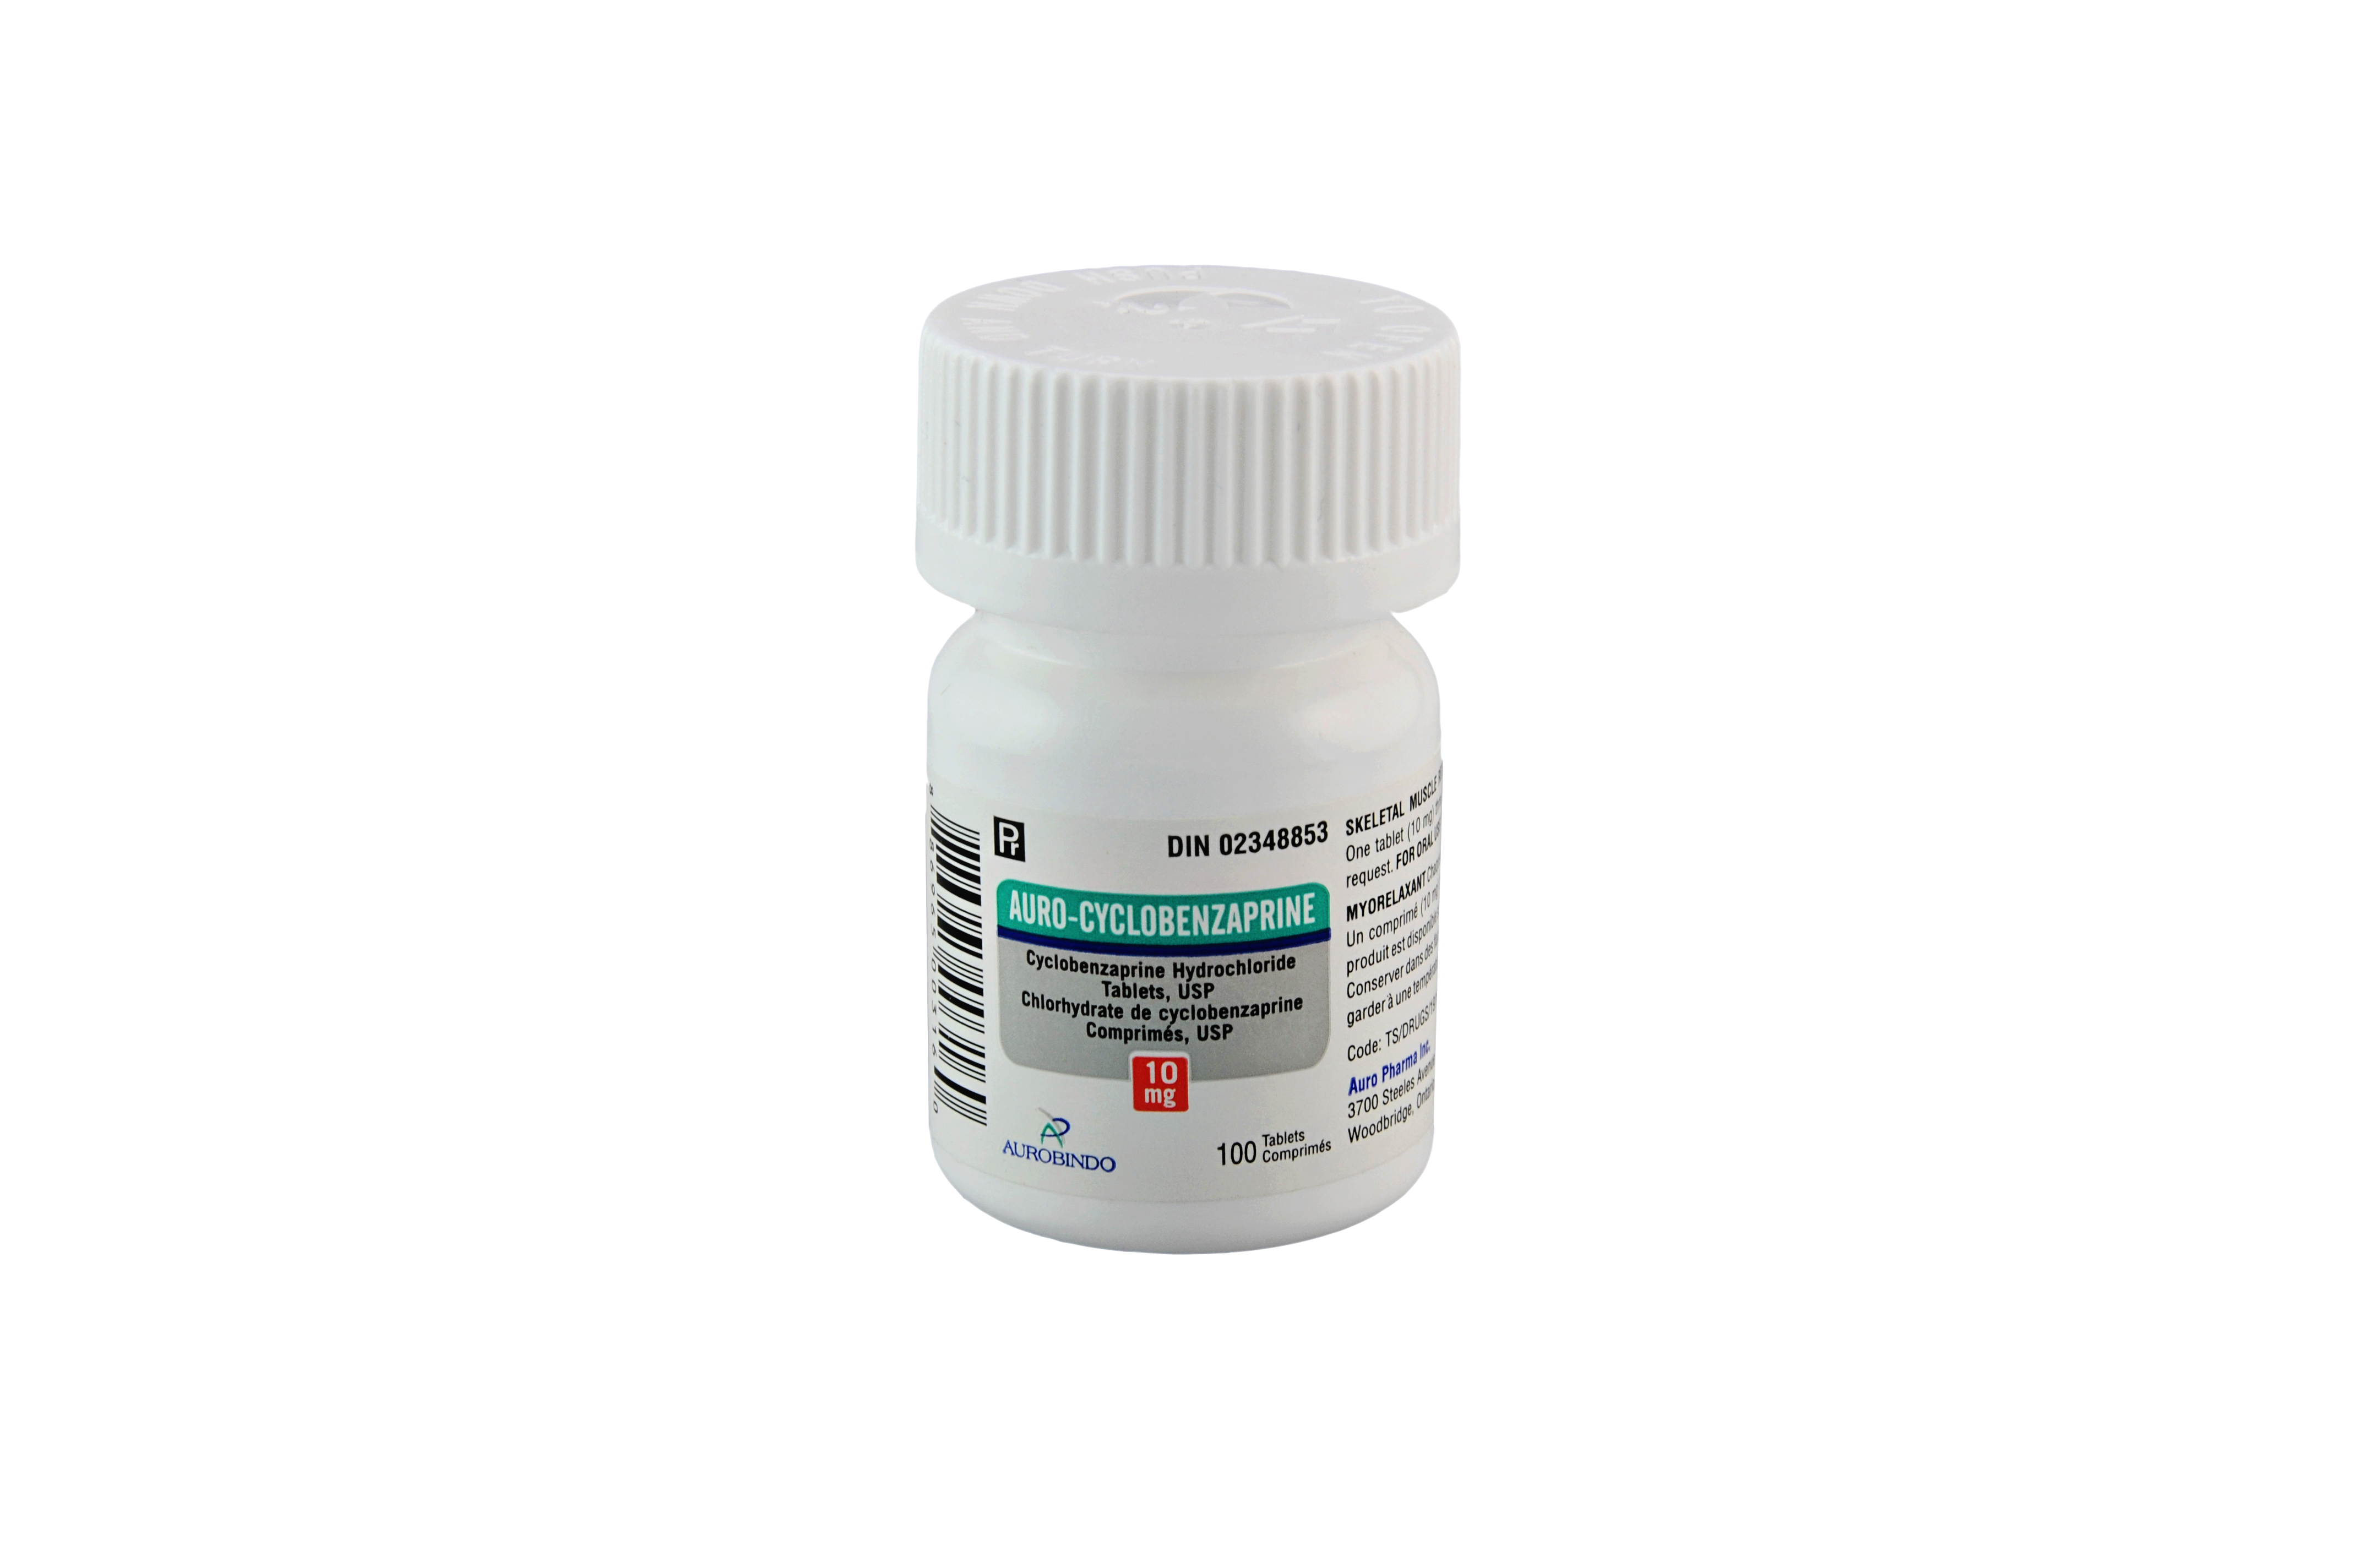 pms cyclobenzaprine 10 mg